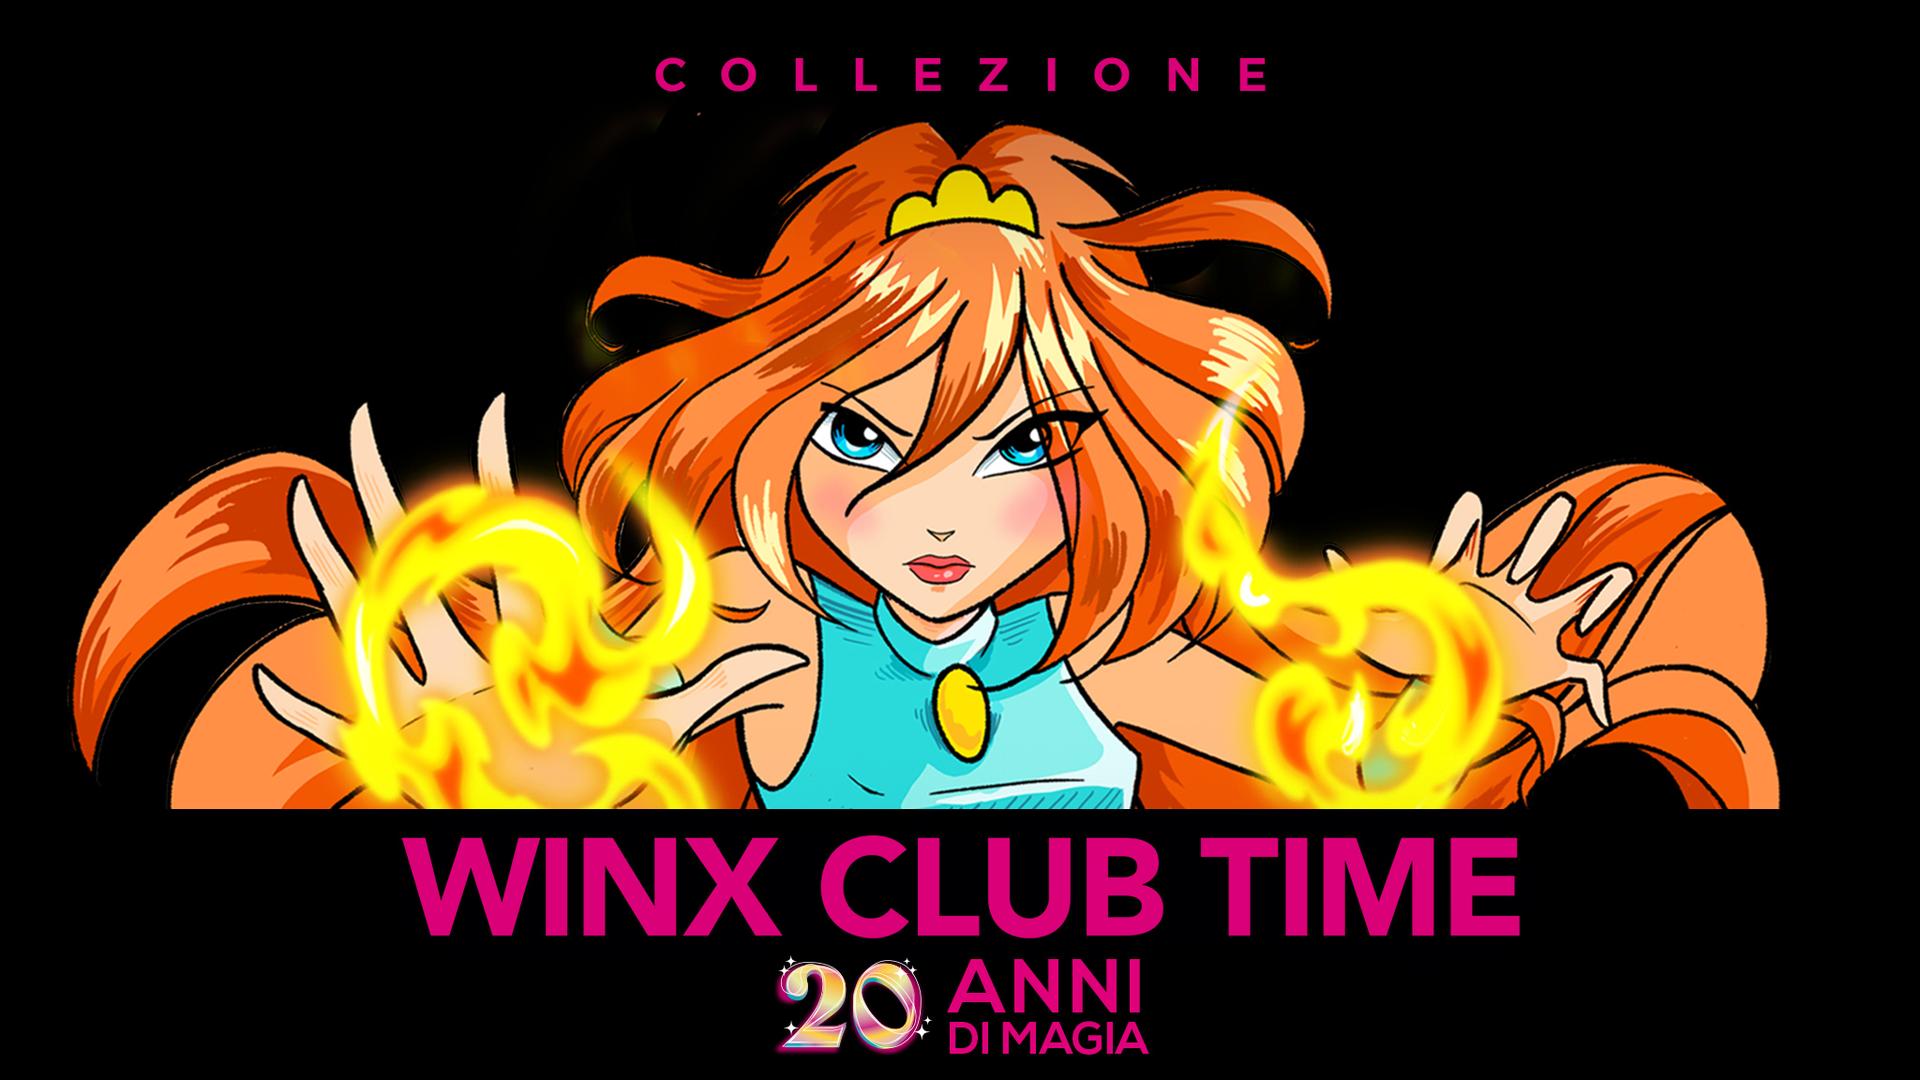 WINX CLUB TIME, RaiPlay celebrates 20 years of fairy magic